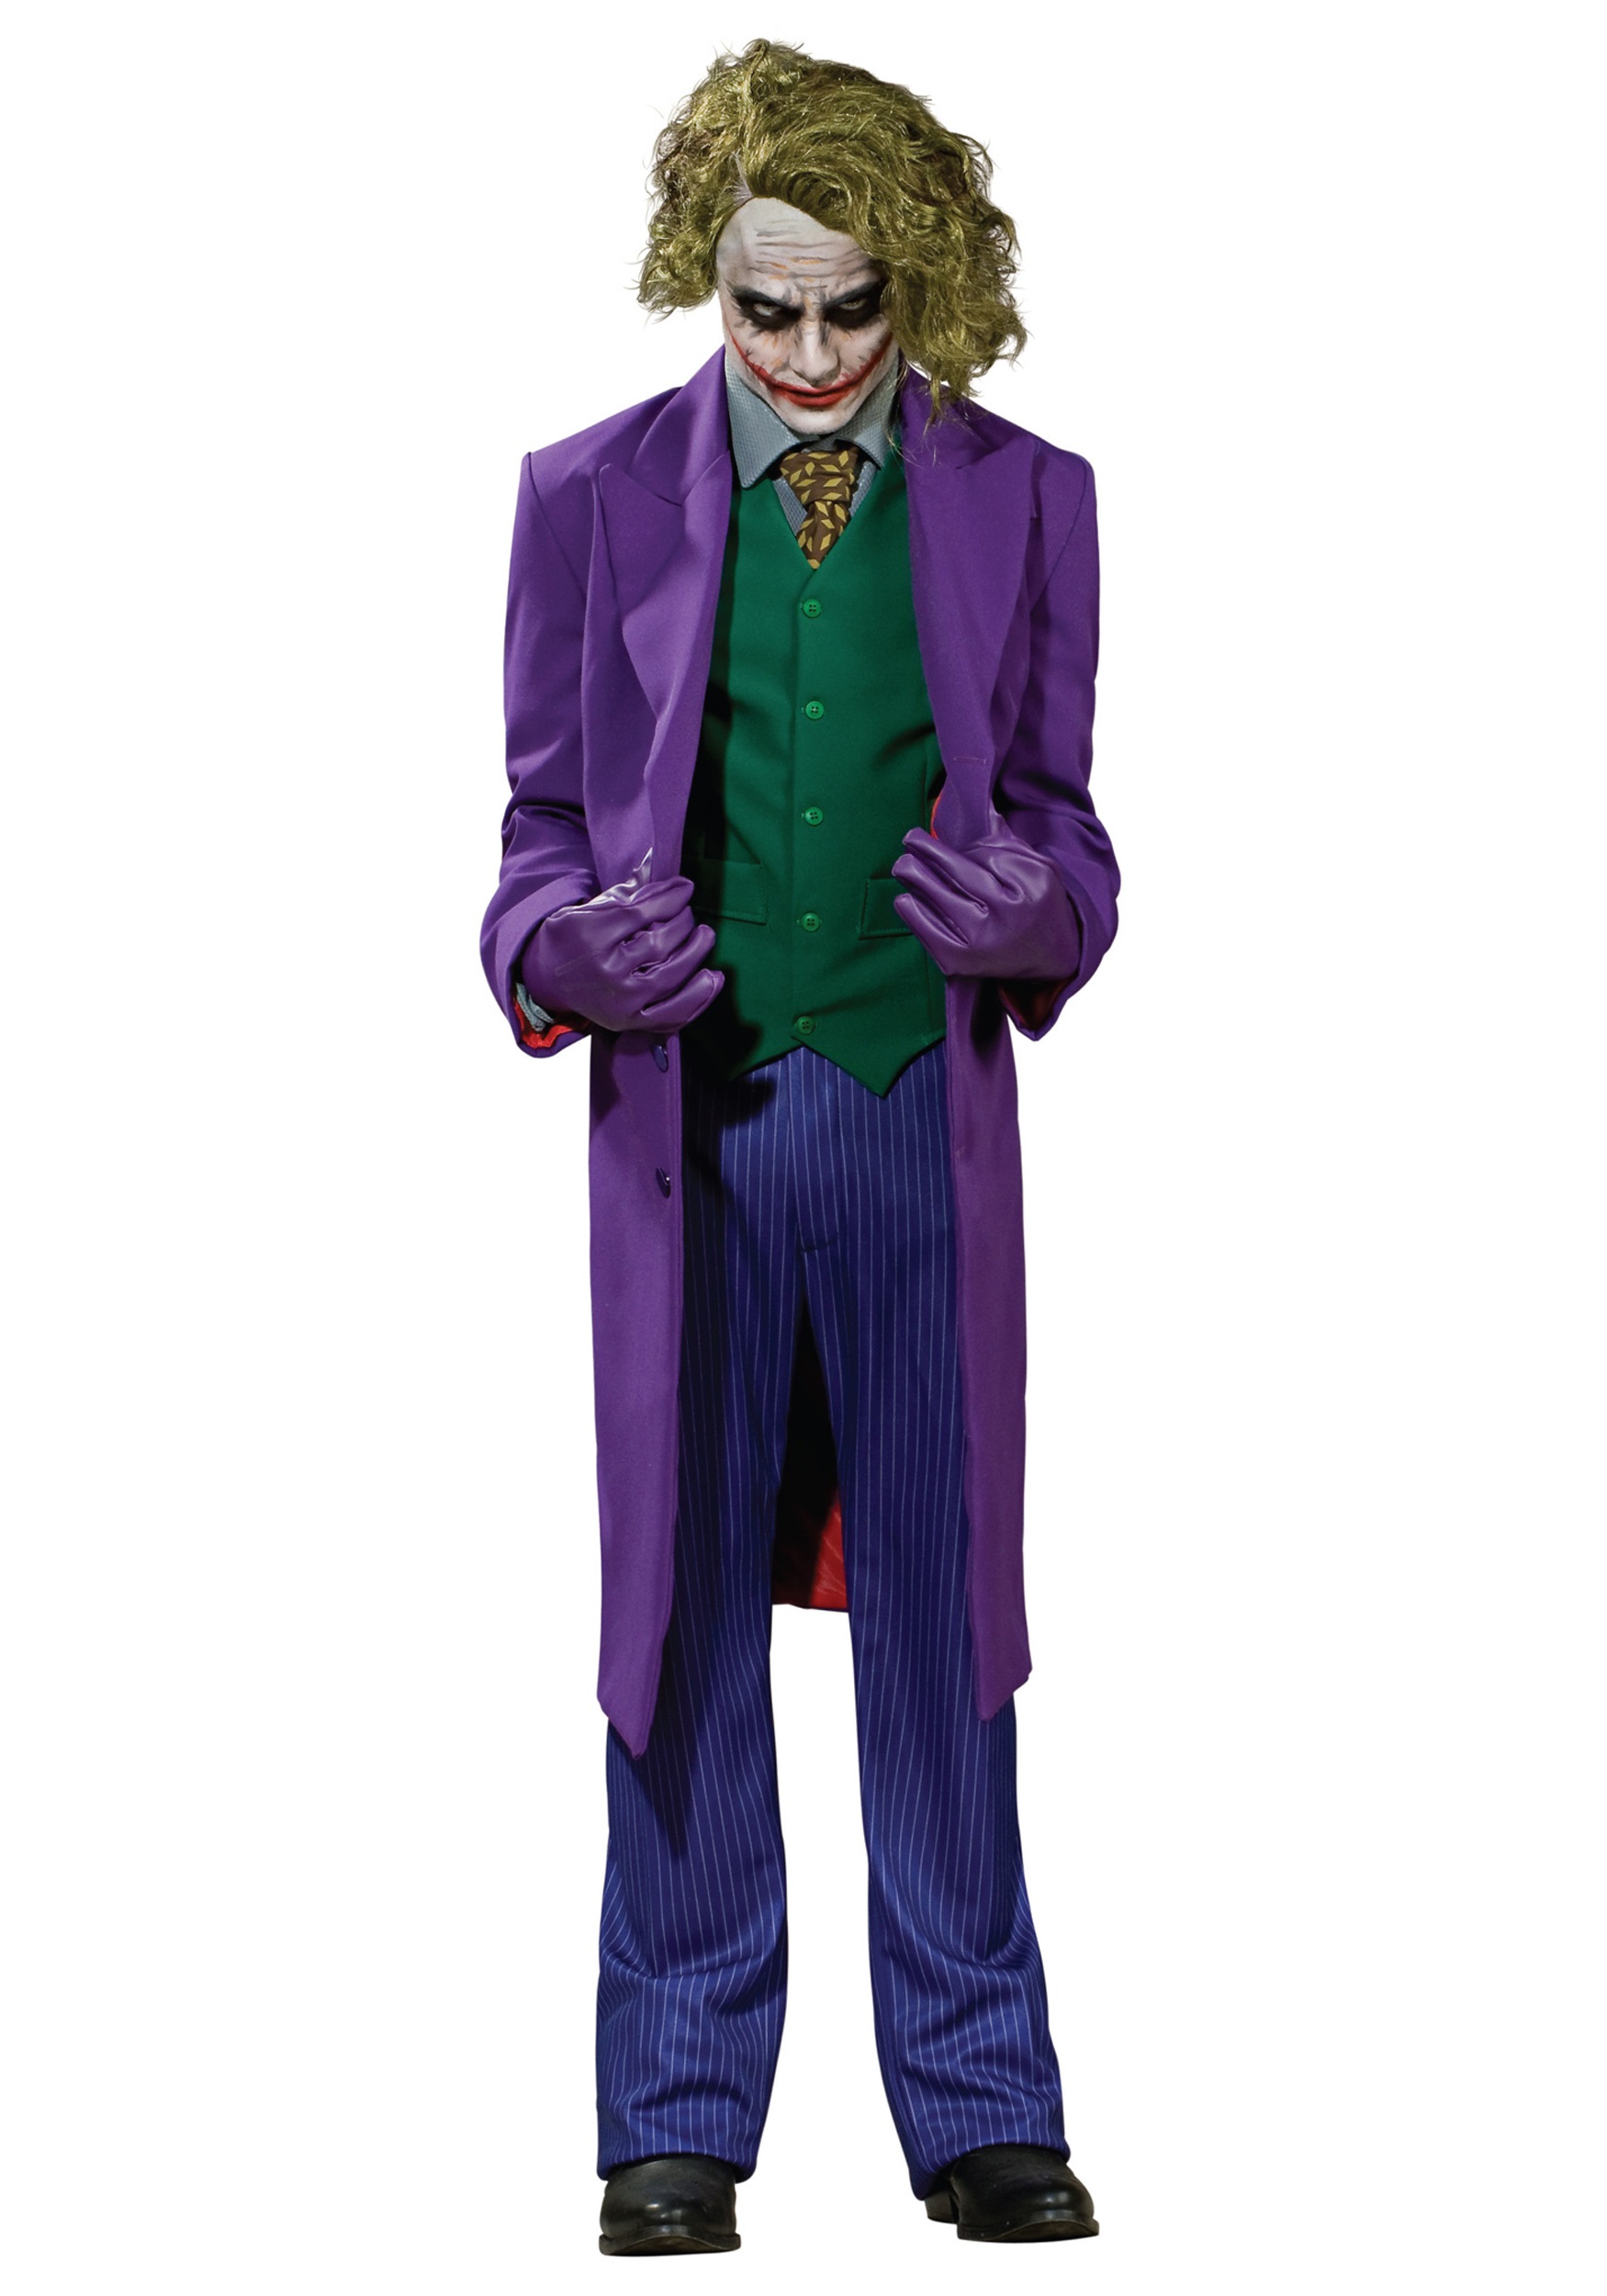 Grand Heritage Joker Costume - Halloween Costume Ideas 2021